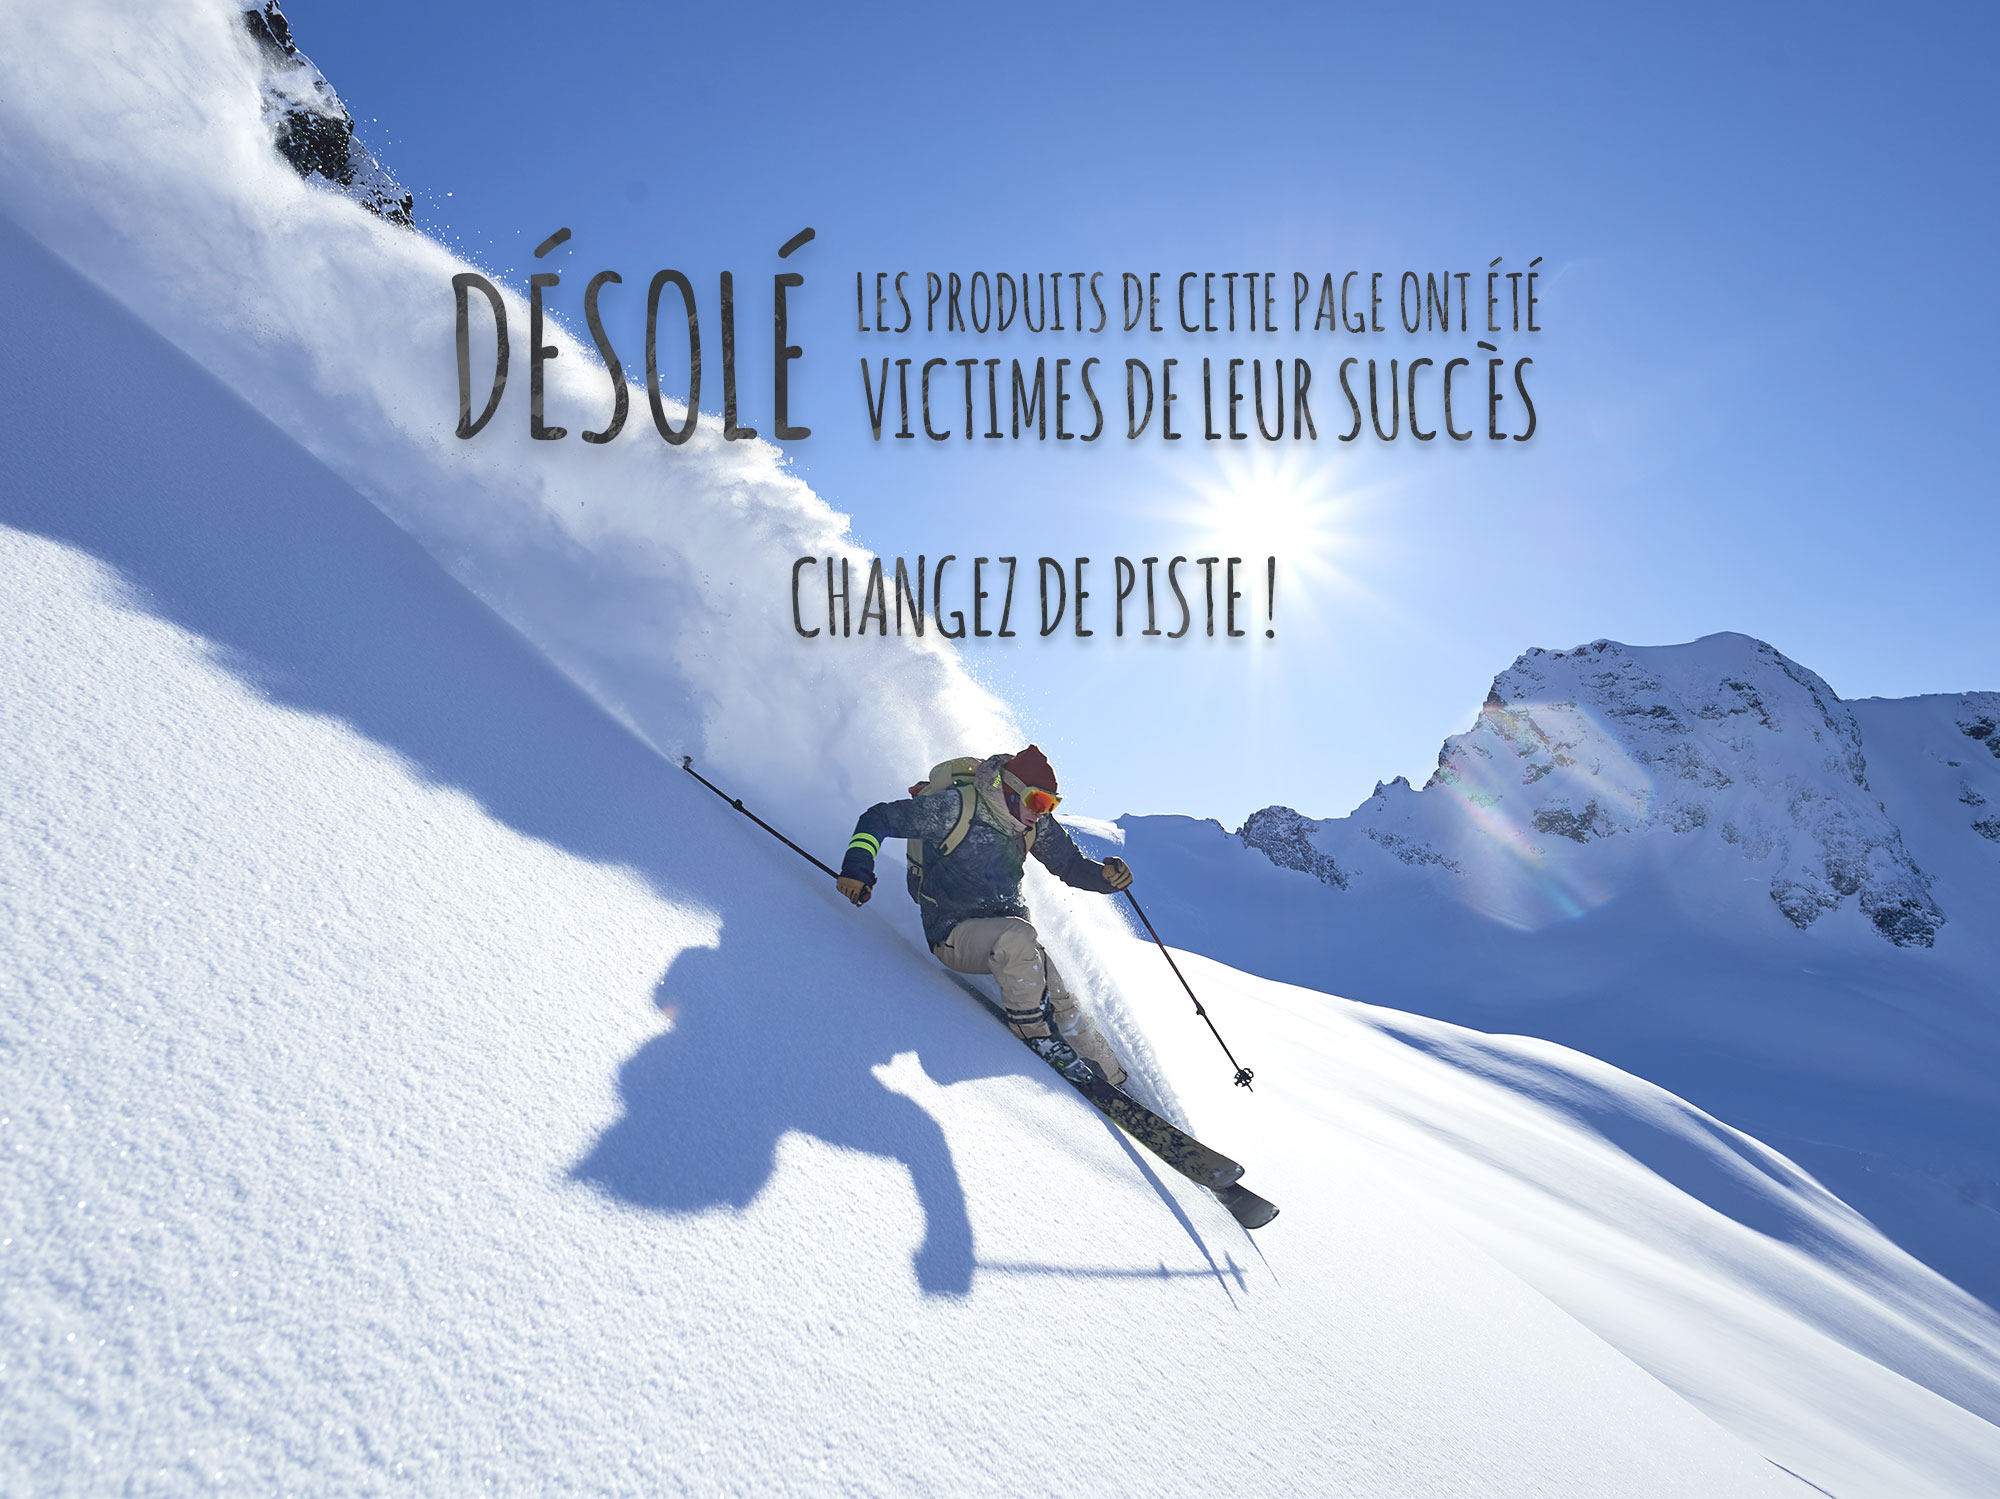 Destockage ski : Matériel de ski pas cher, prix discount